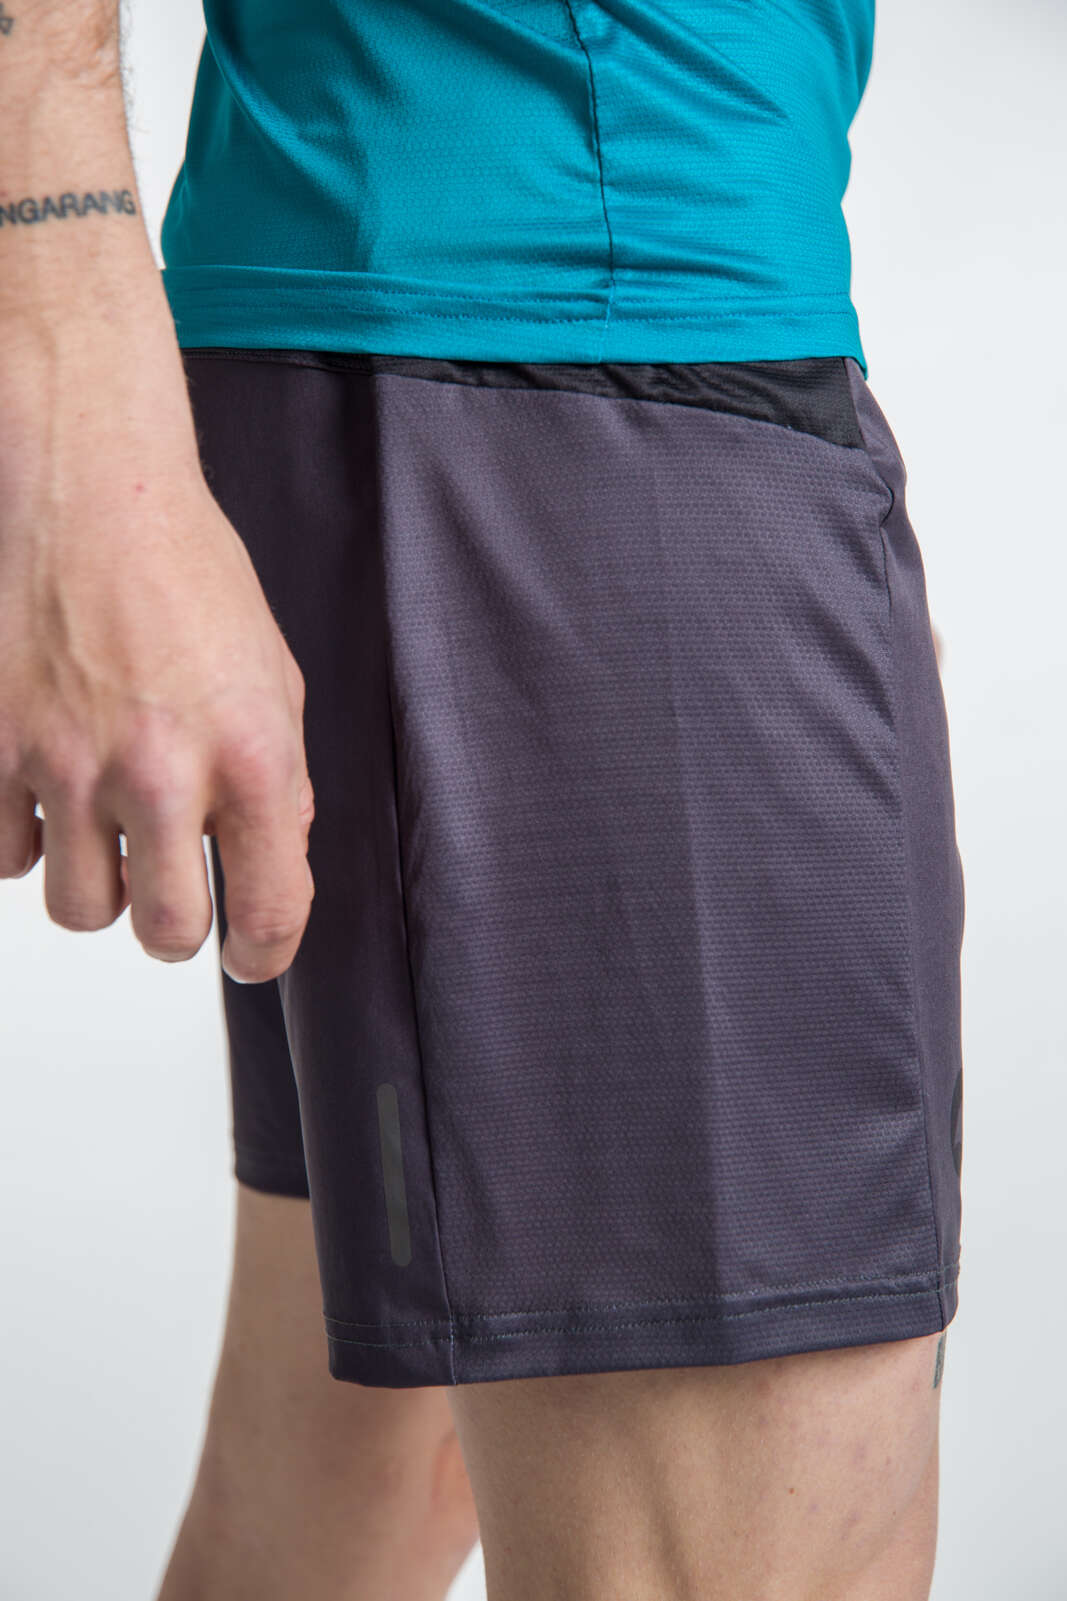 Men's Running Shorts - Side View